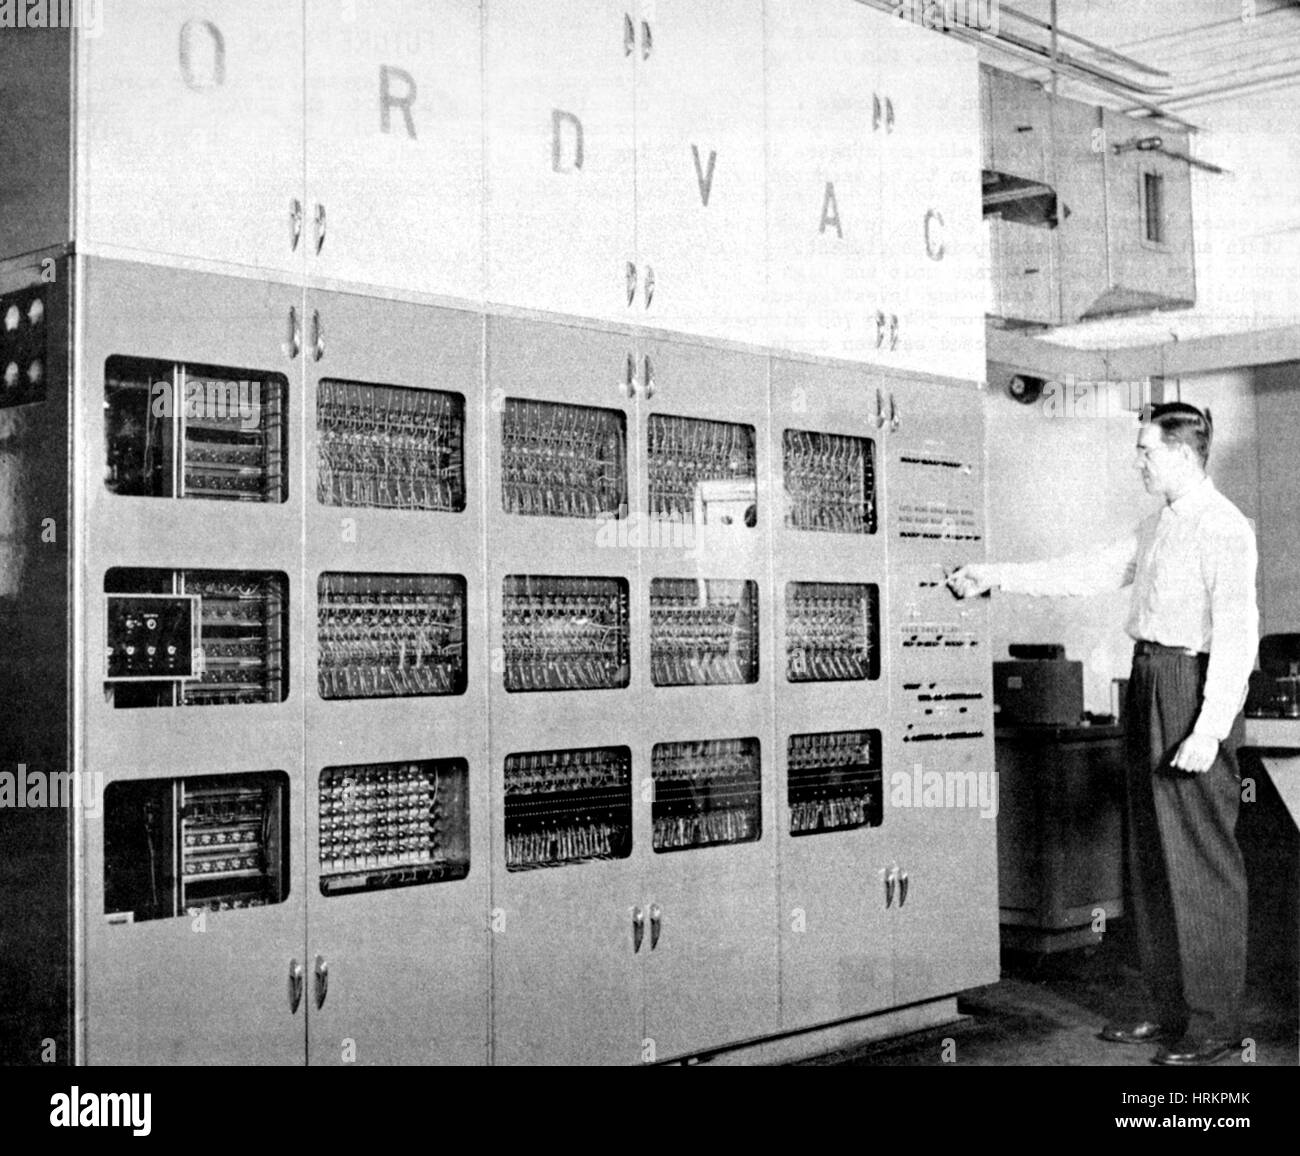 Worker at ORDVAC Computer Stock Photo